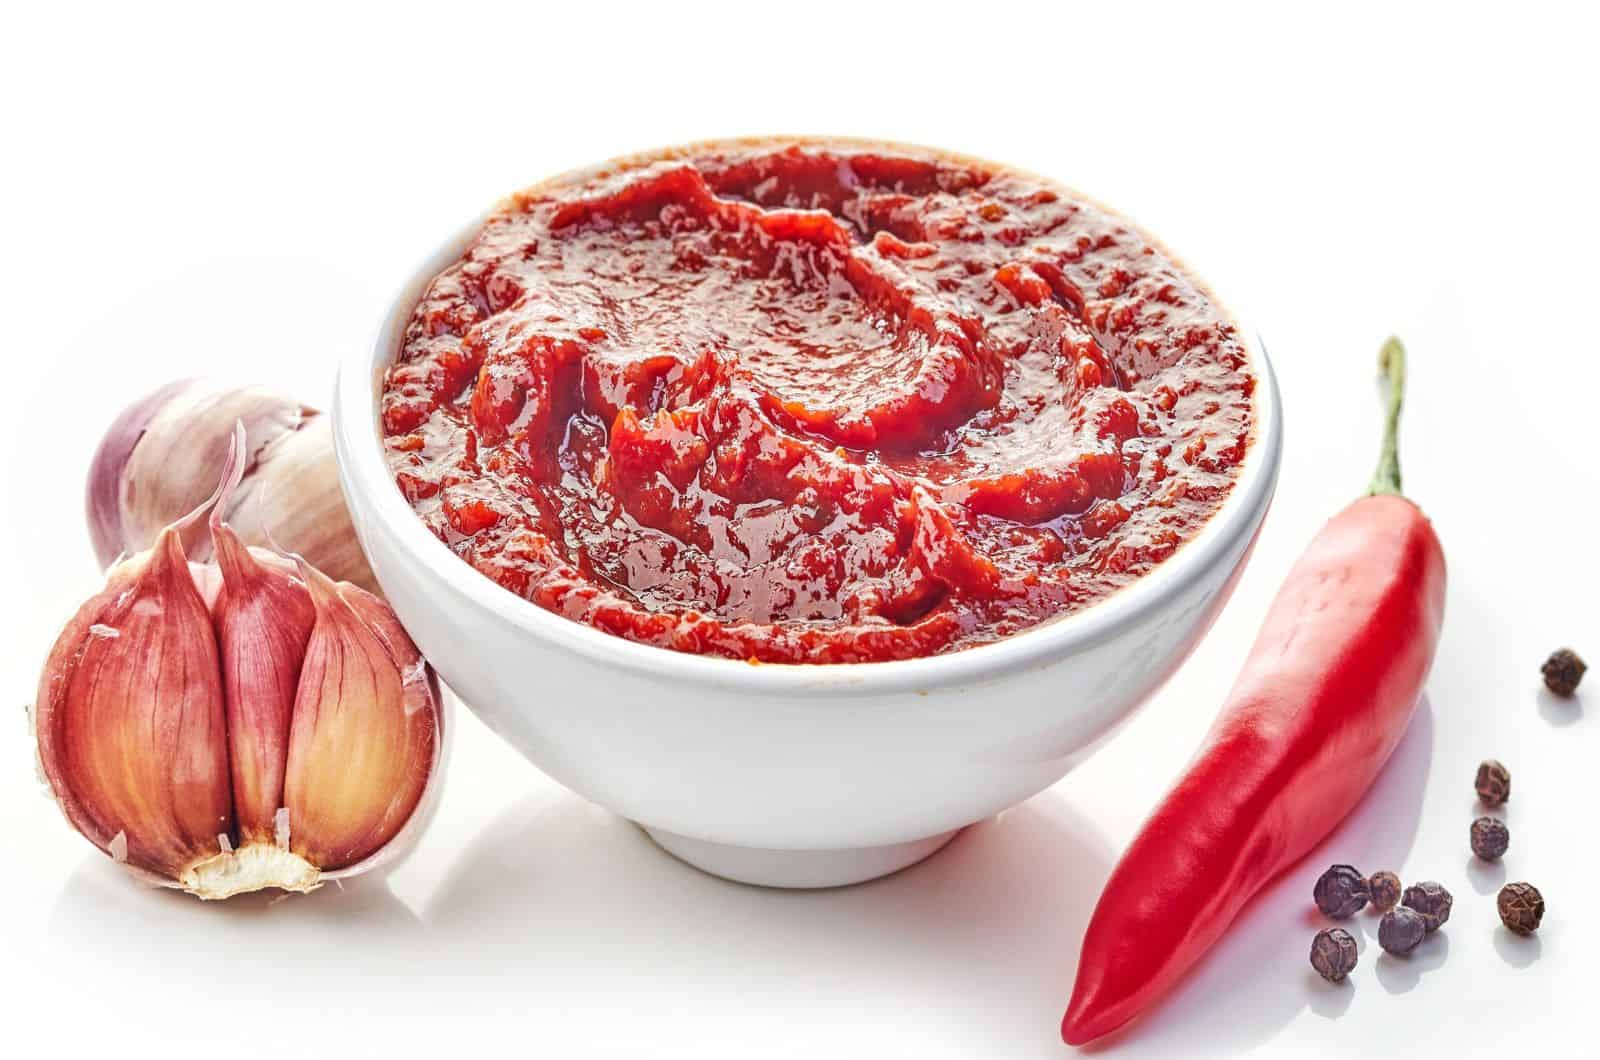 Chili garlic sauce with red chiles